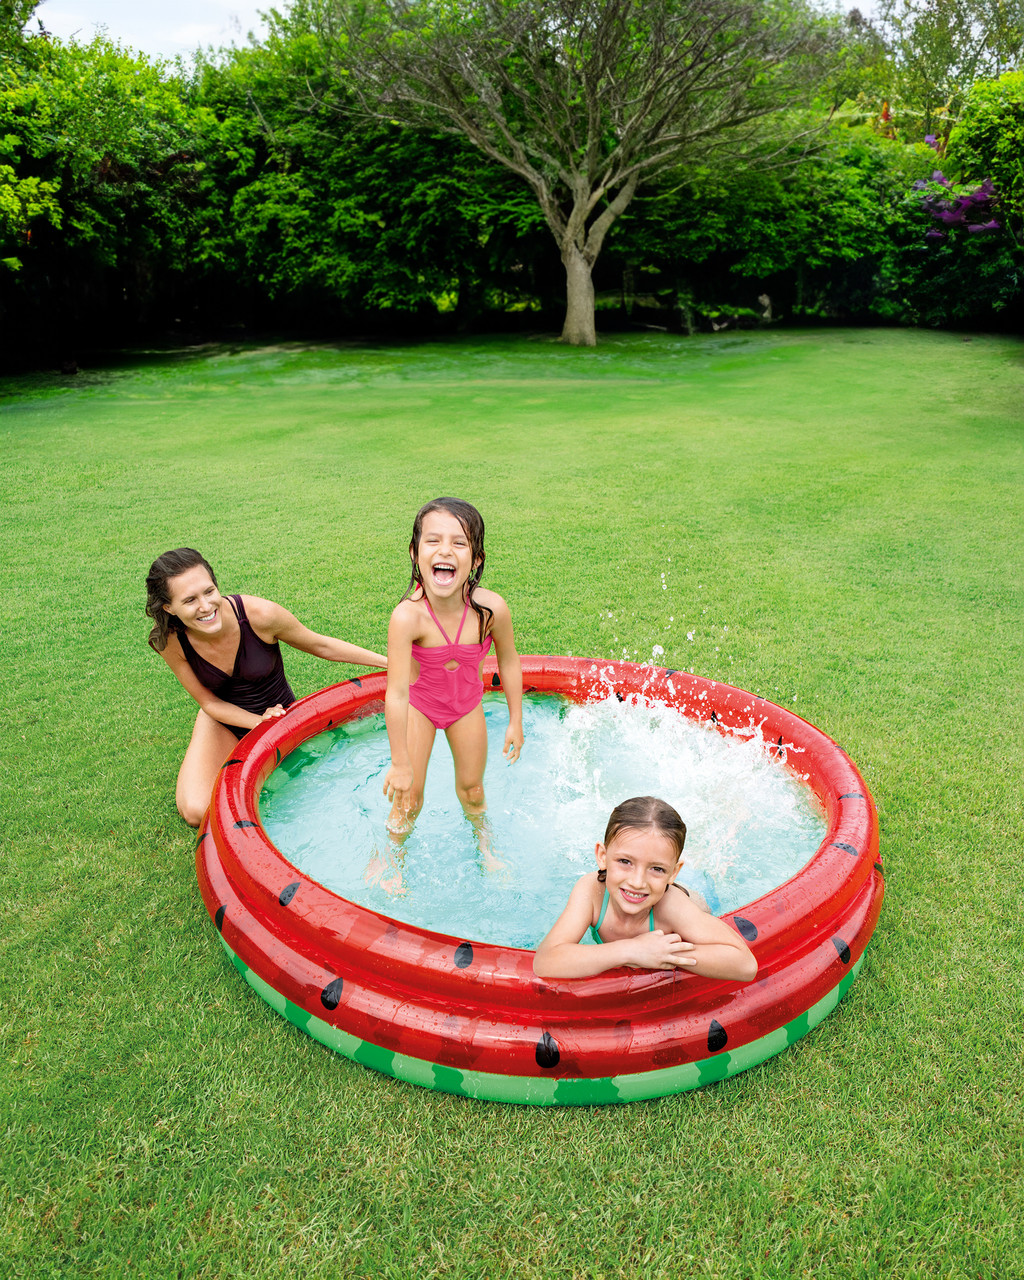 Intex Crystal Blue Inflatable Pool, 66x15